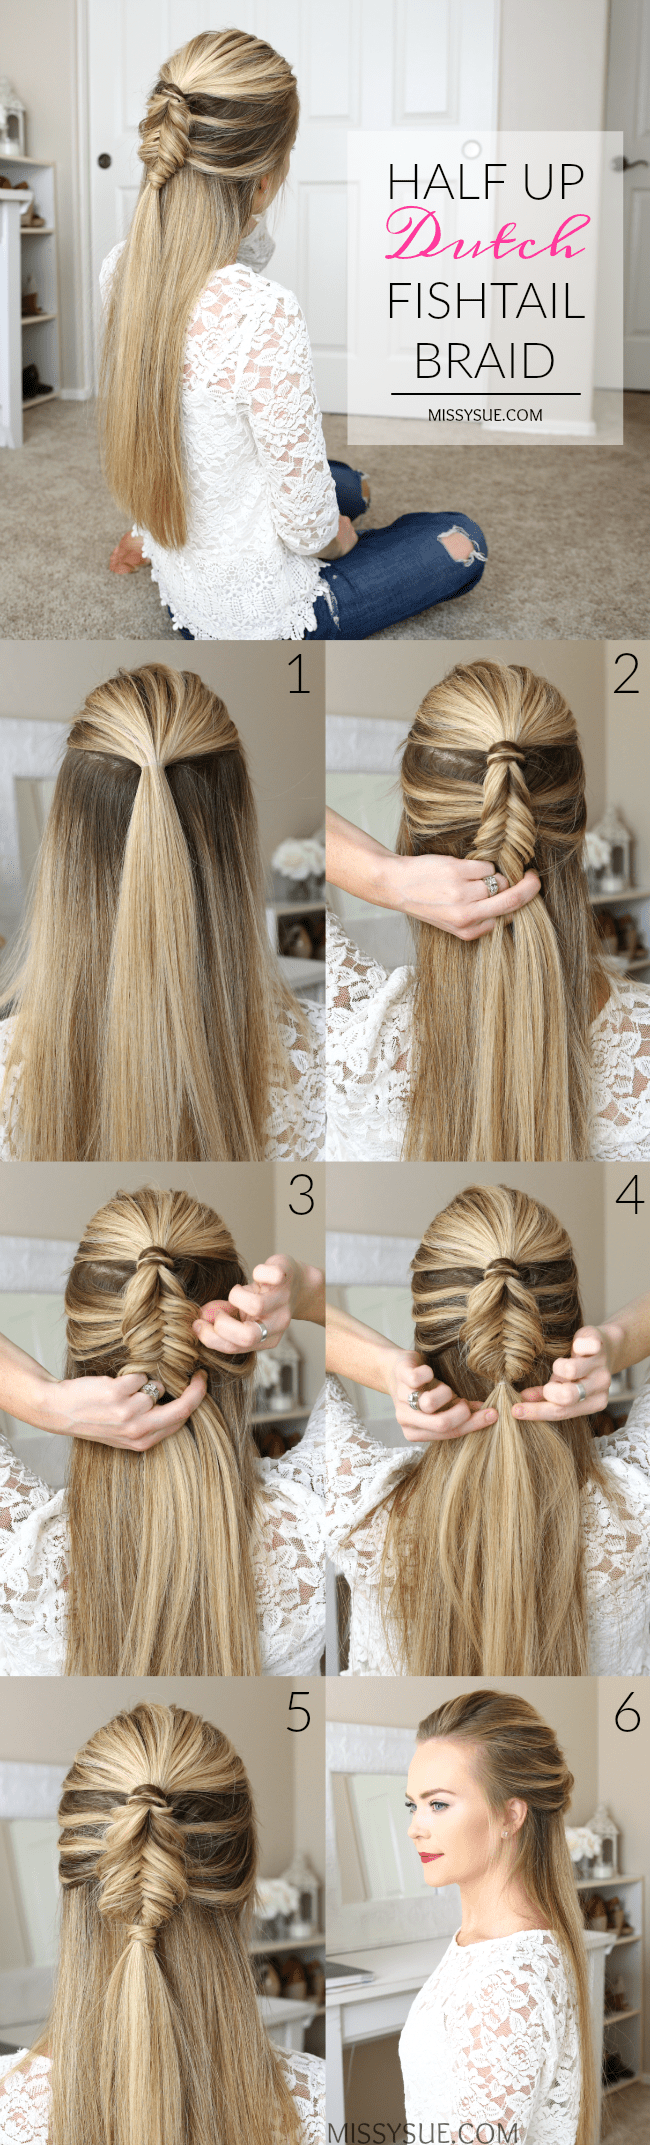 half-up-dutch-fishtail-braid-hairstyle-tutorial